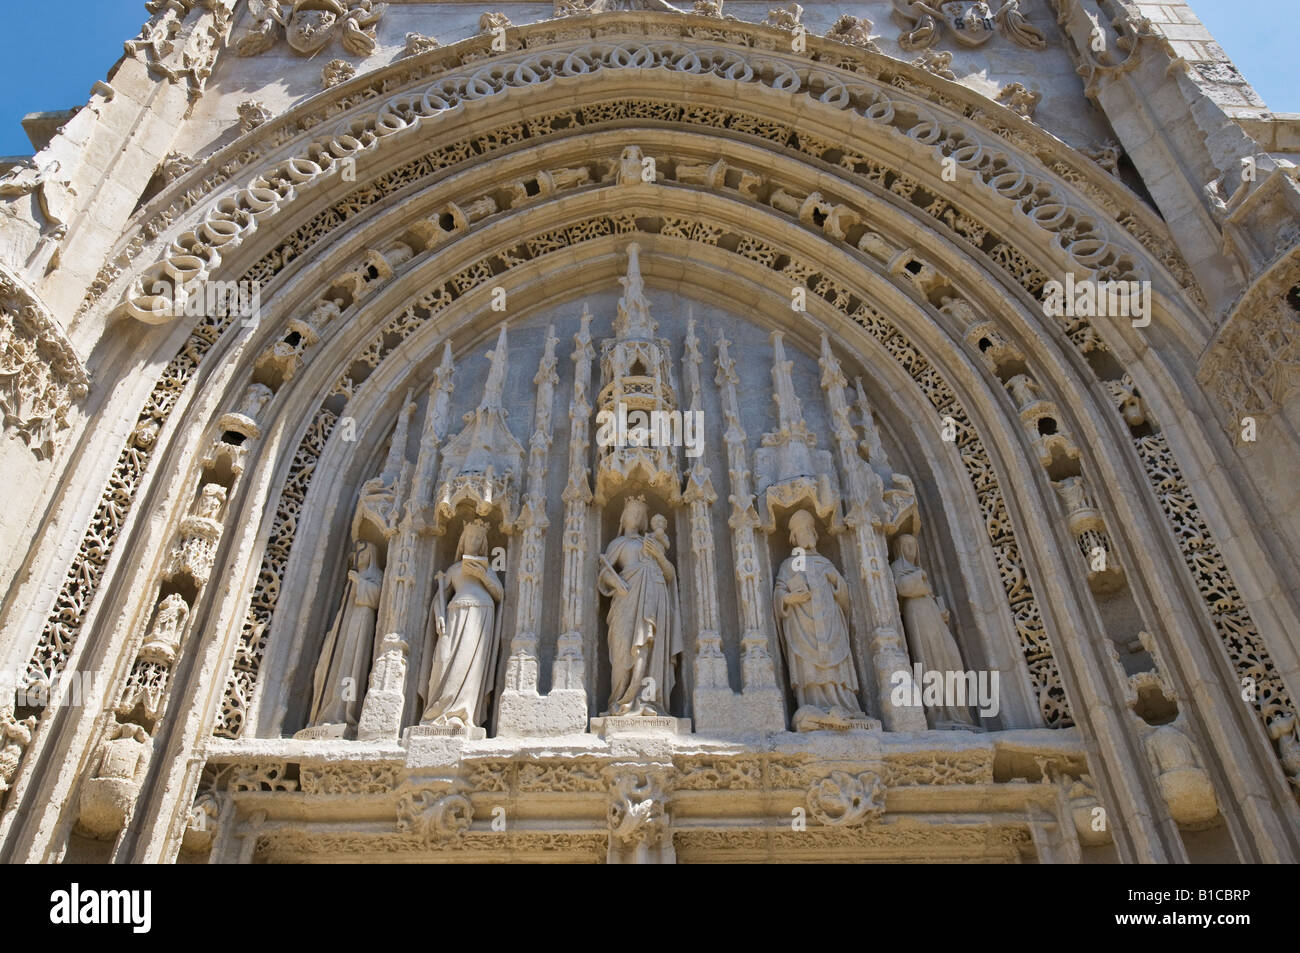 11-15th century Sainte Radegonde church, Poitiers, Vienne, France. Stock Photo